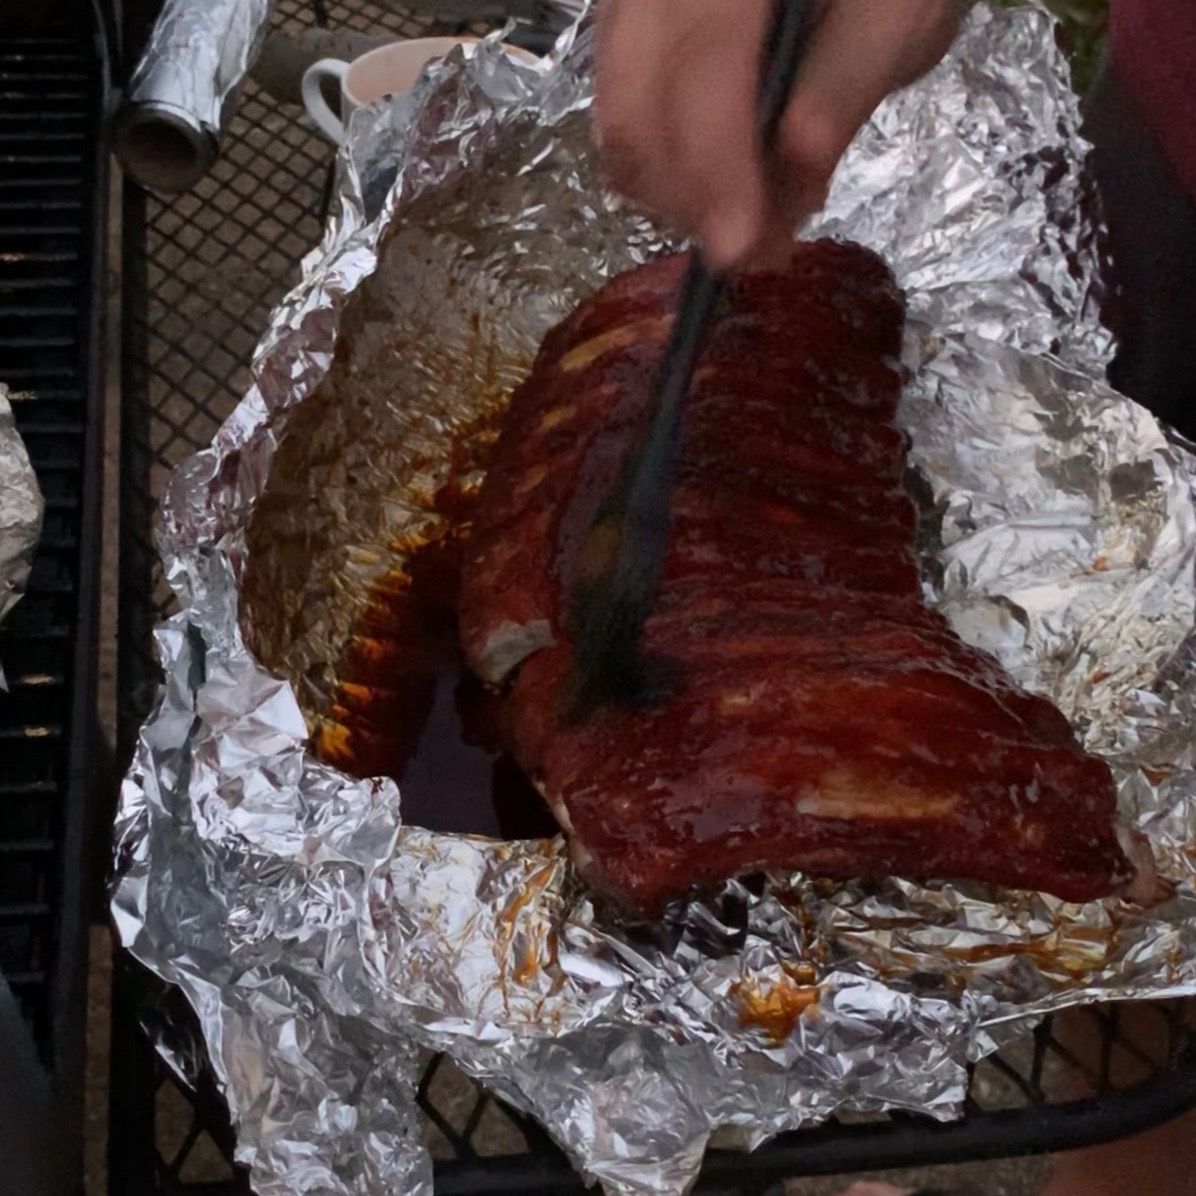 How to cook pork ribs | Bunnings Workshop community